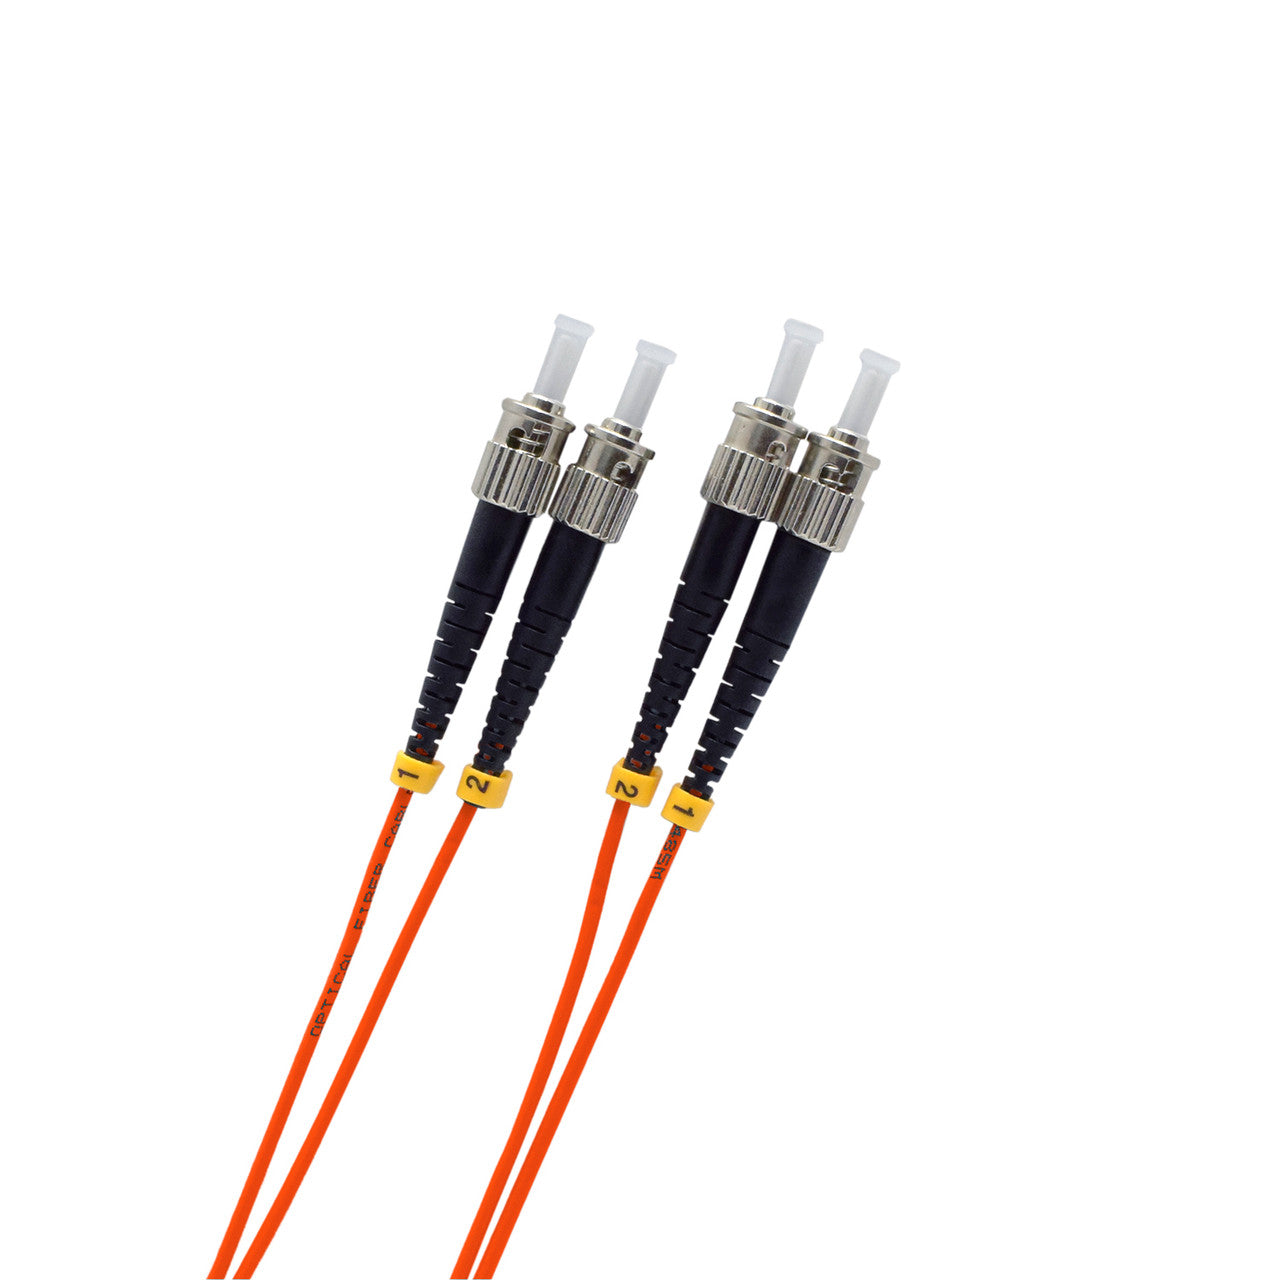 2 Meter ST/ST 62.5/125 Multimode OM1 Duplex Fiber Patch Cable